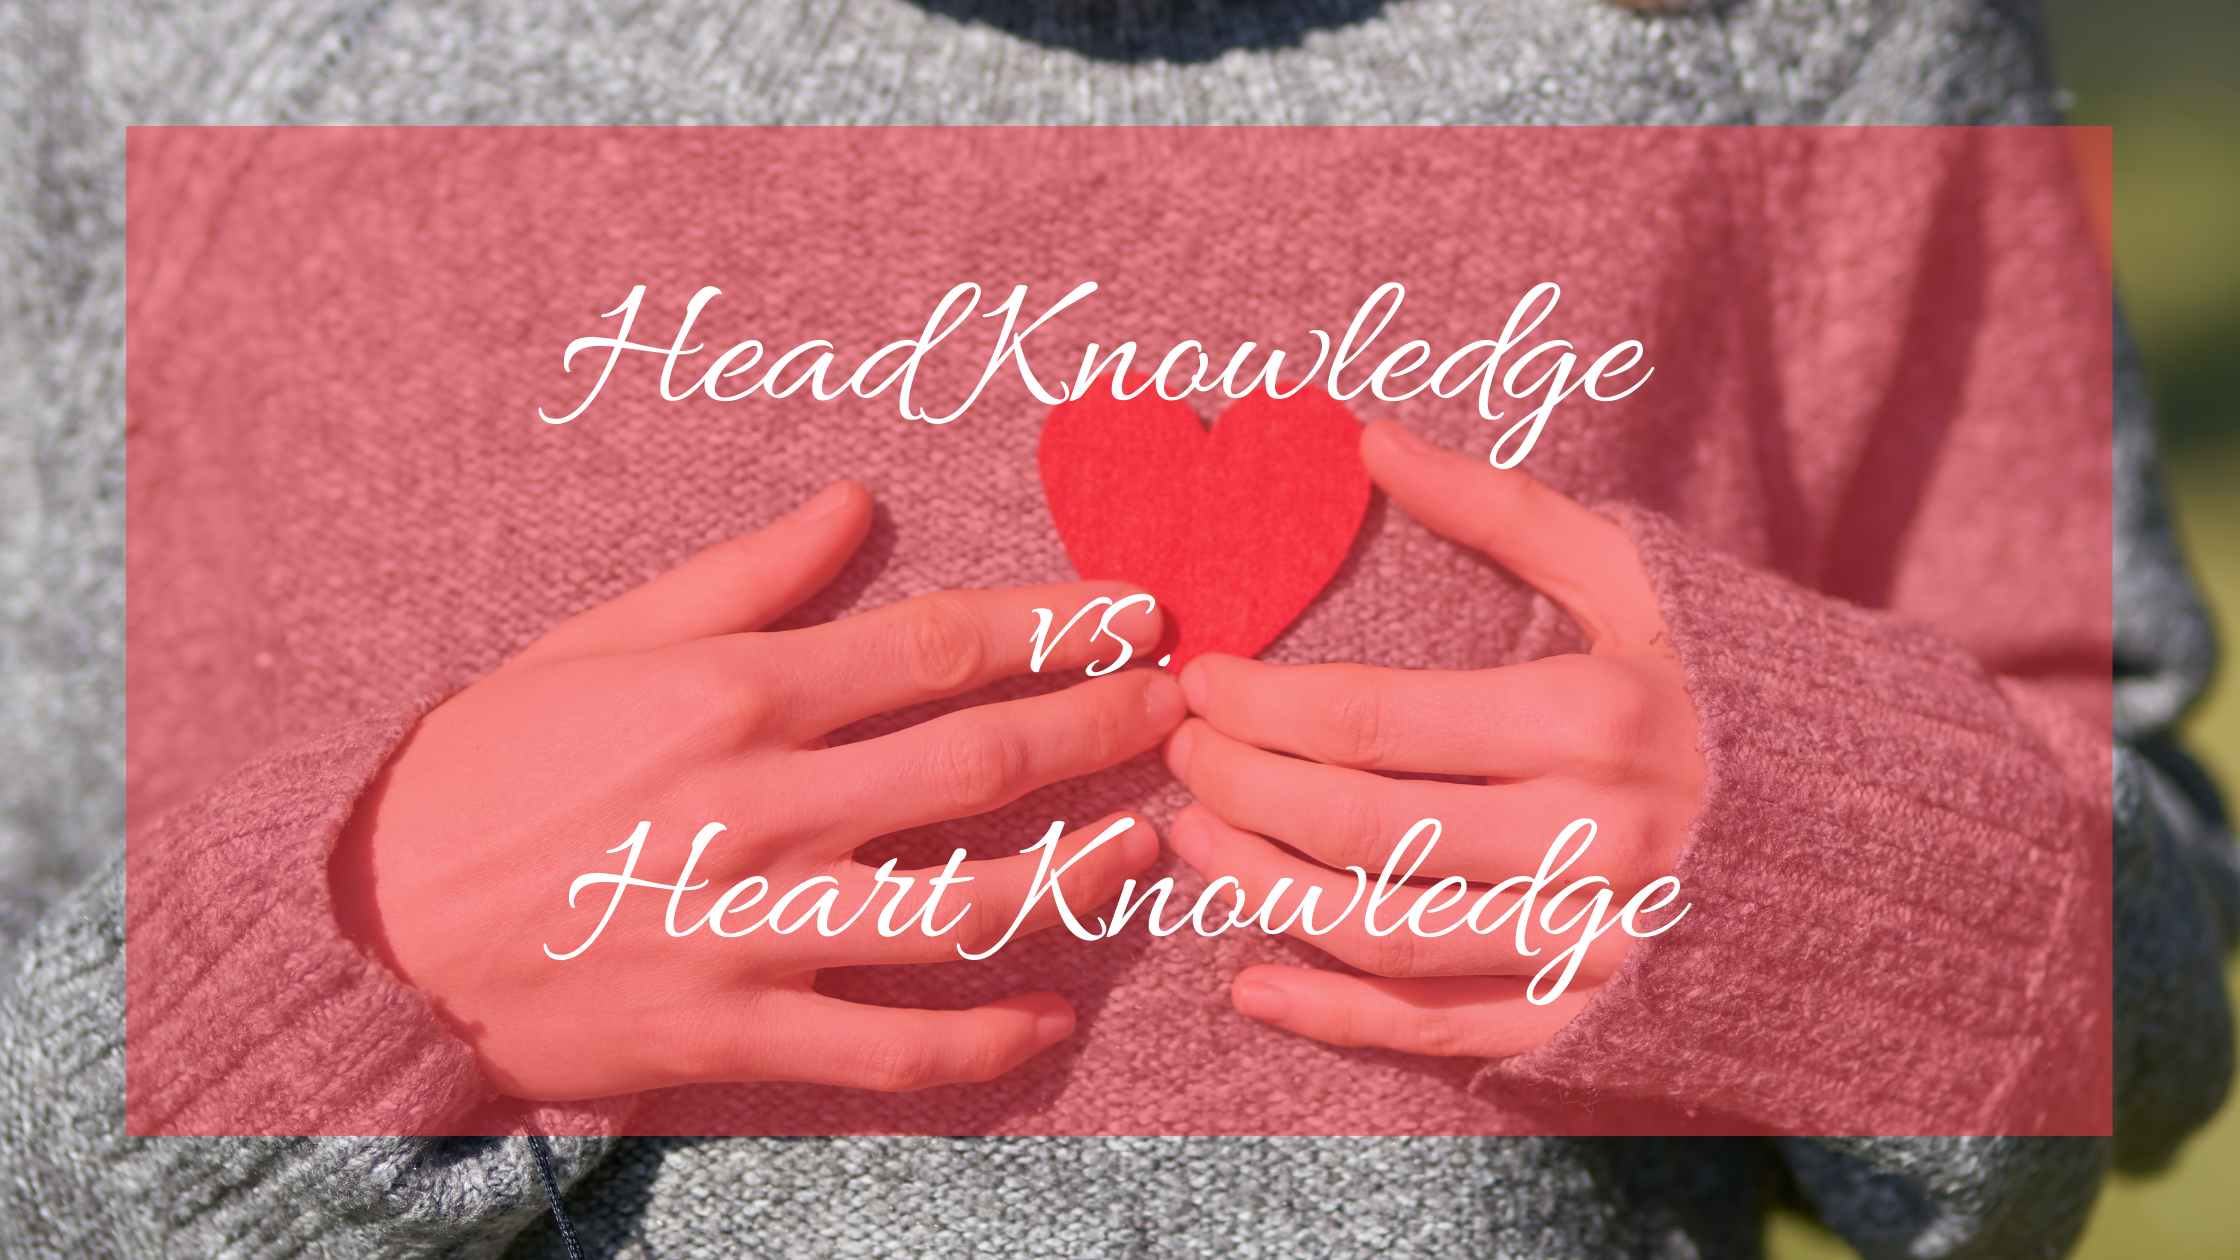 Head Knowledge vs. heart knowledge blog title